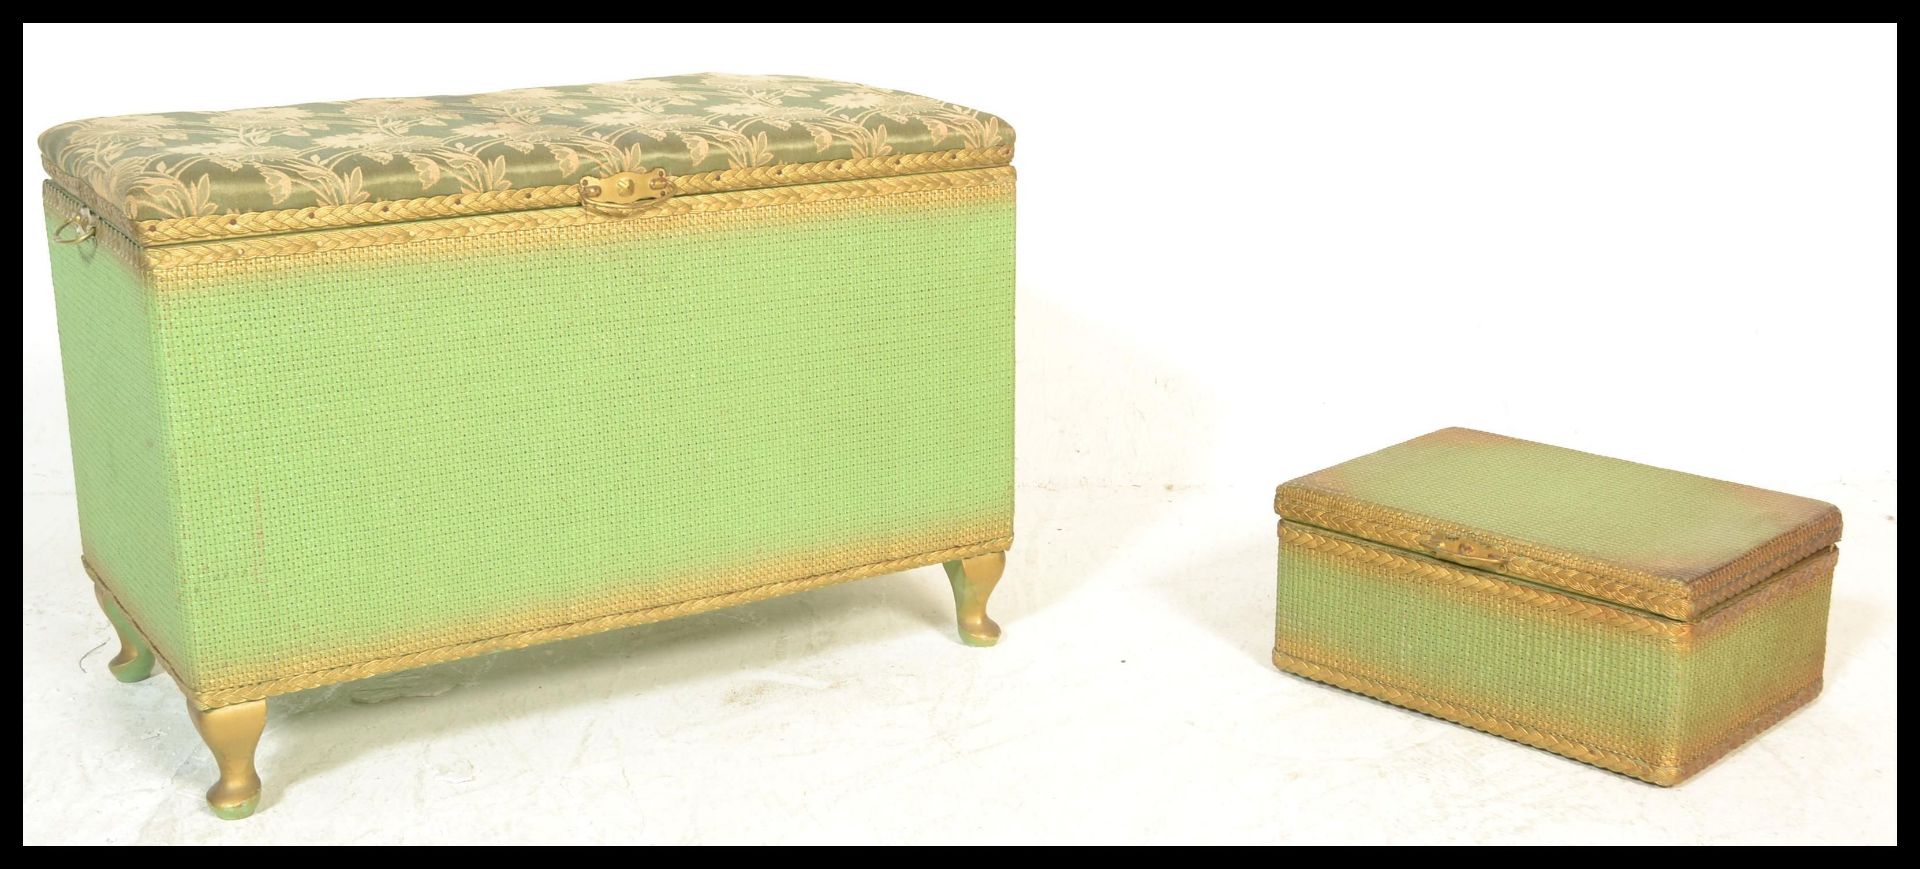 A vintage 20th Century Lloyd Loom Lusty style Ottoman blanket box chest, in the original colourway